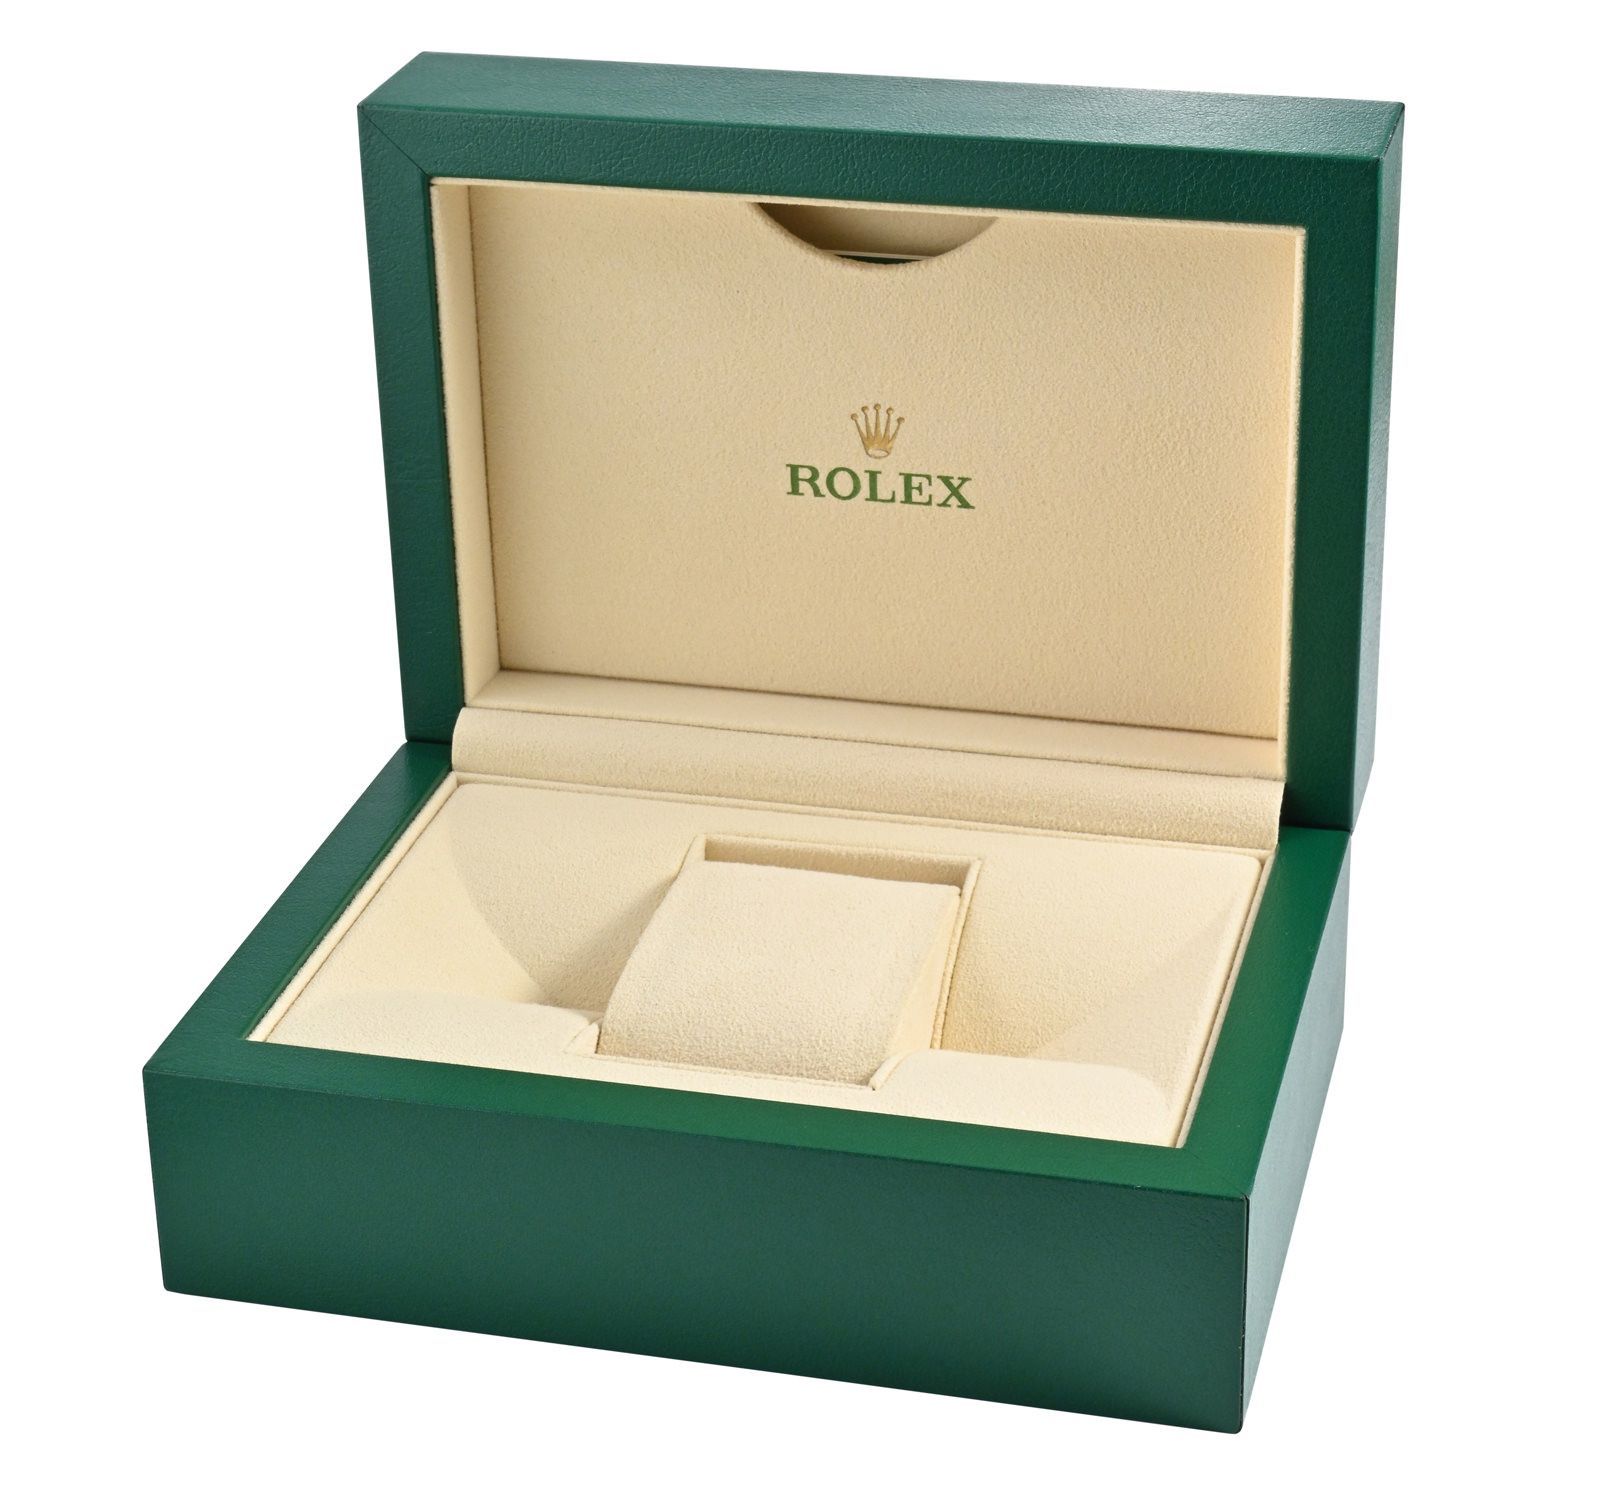 Rolex Datejust Features